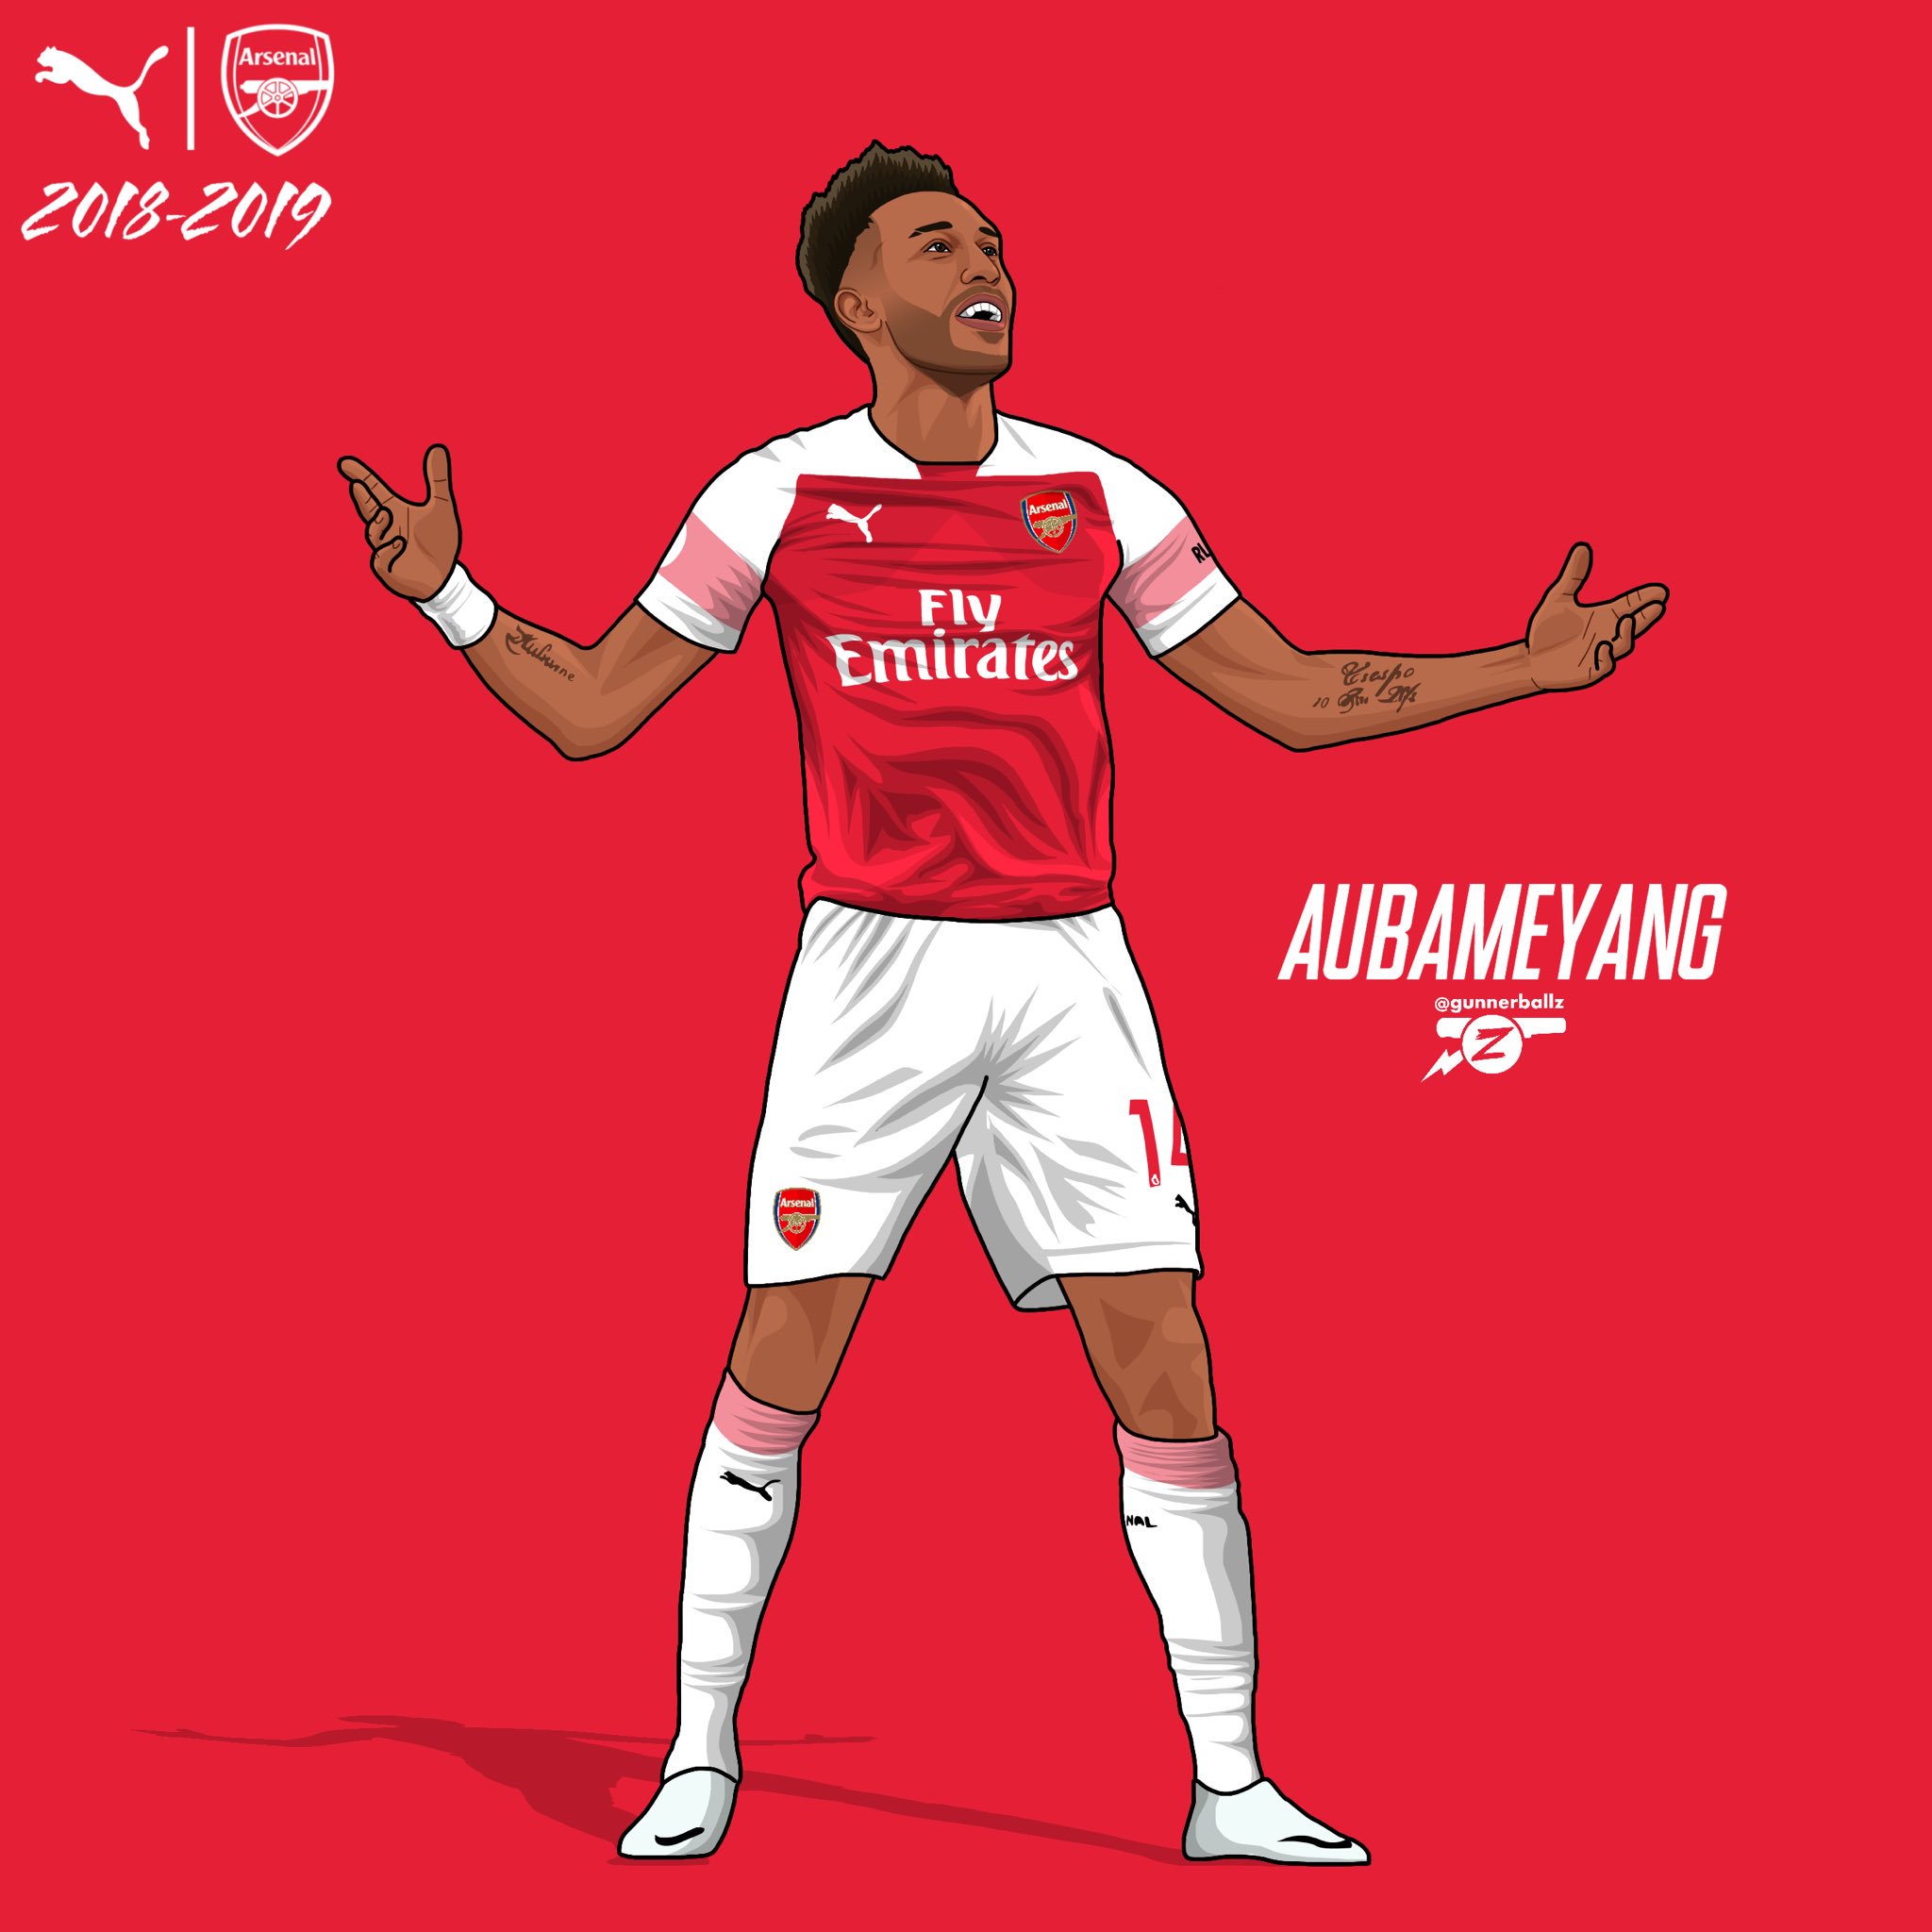 Jason Woods on X: "AUBAMEYANG 1-2!! ⚽️⚽️💥 #Arsenal #afc #Aubameyang  #yopiere #puma #coyg https://t.co/Ate0FKl27J" / X